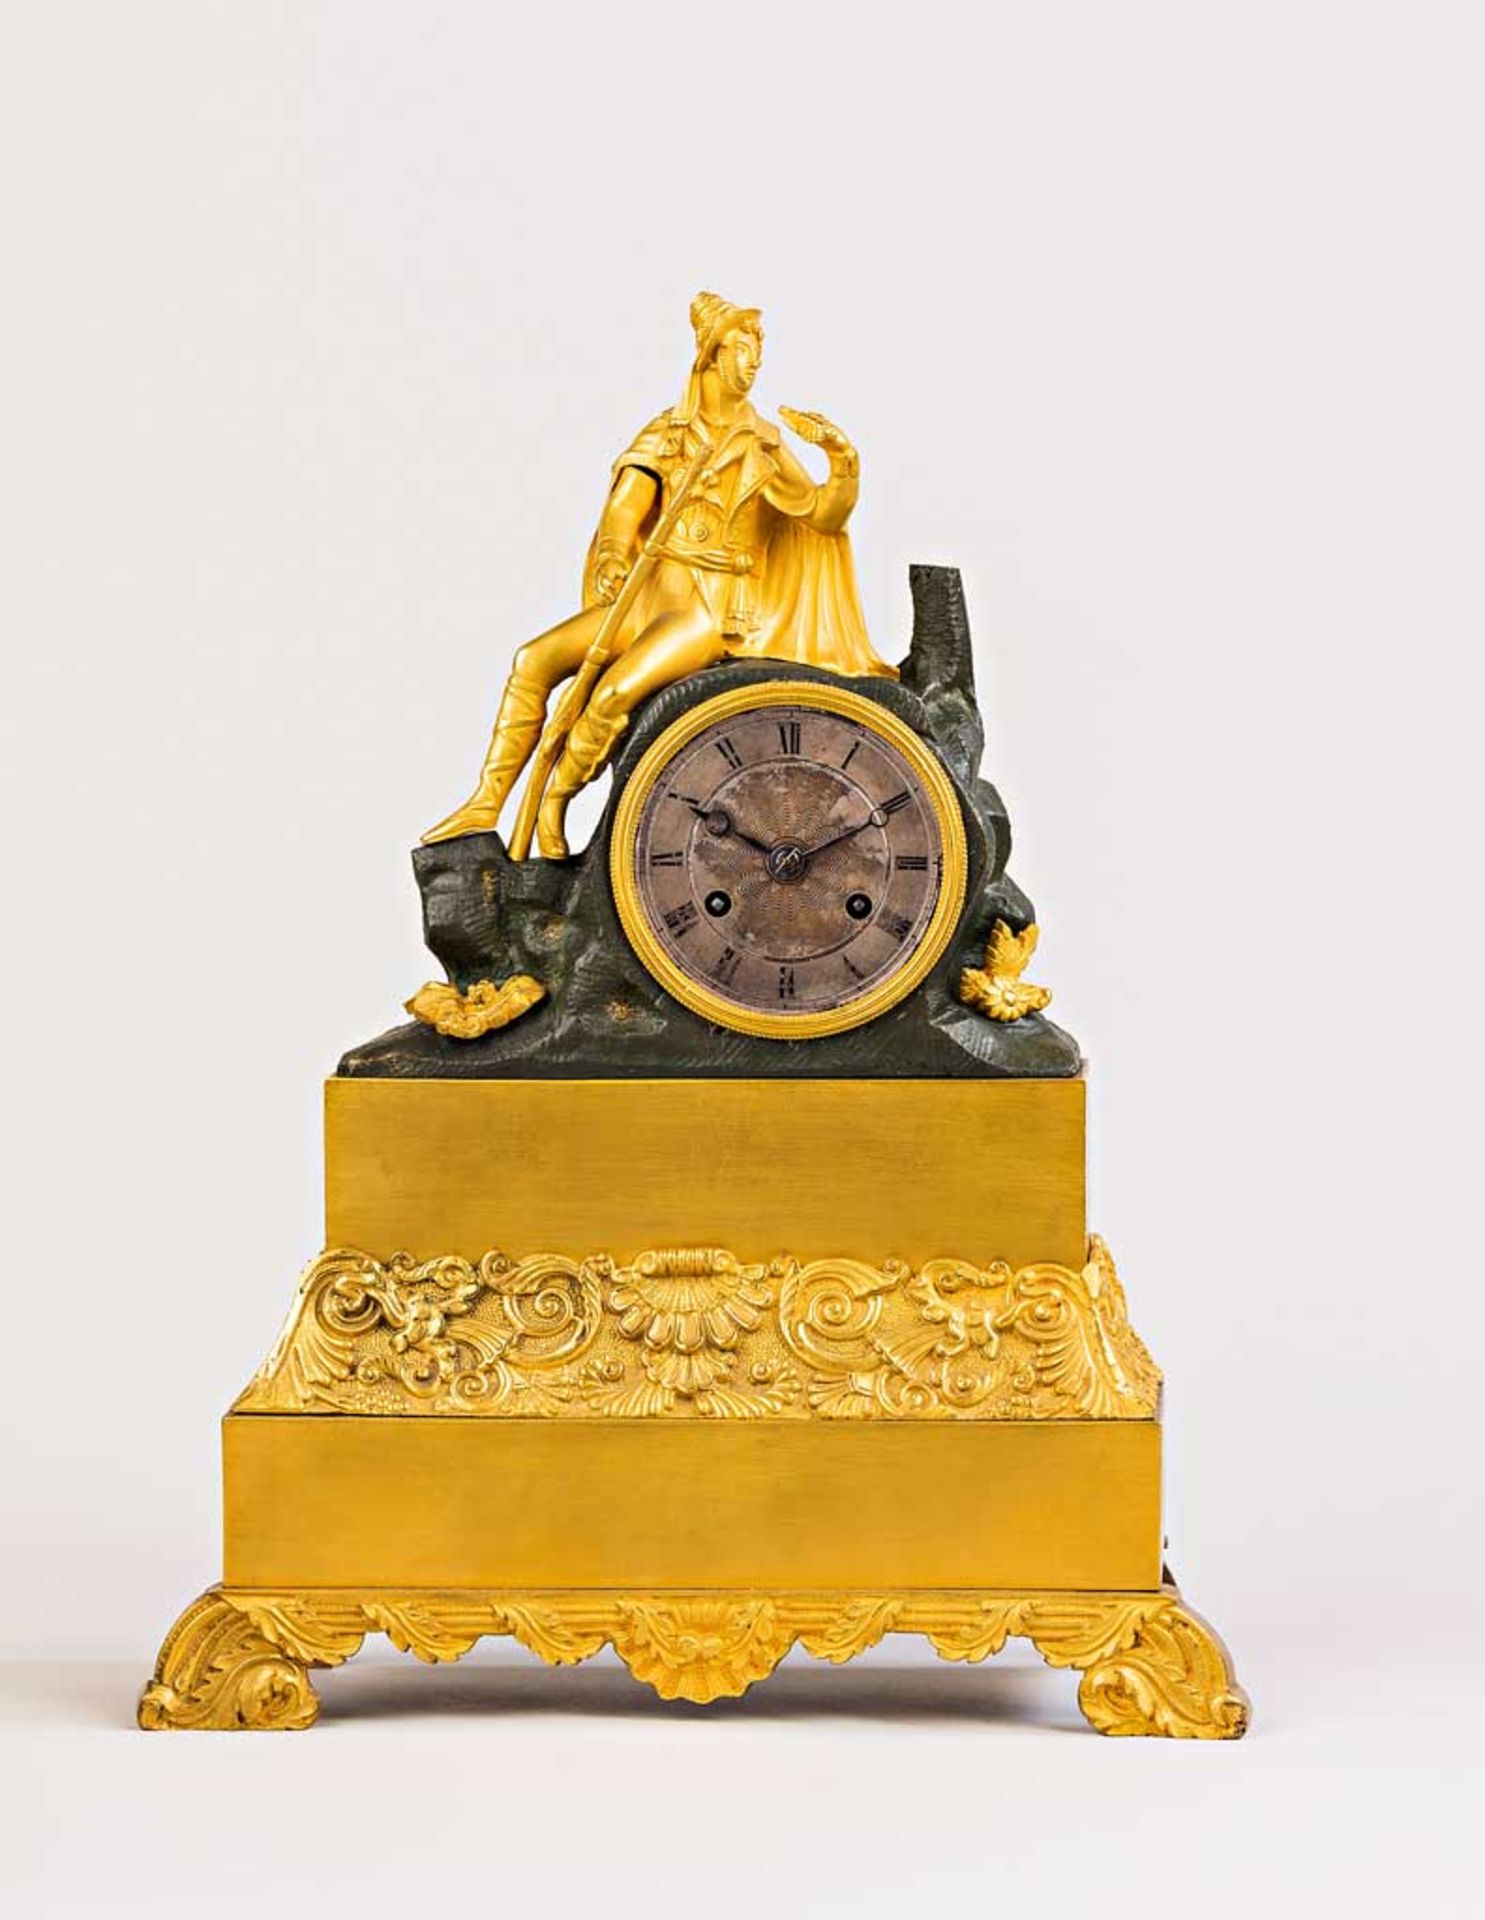 Bronze-doré-Pendule. Figurale Szene. Metallzifferblatt. Rundes Pendulenwerk. 19. Jh. H 35 cm